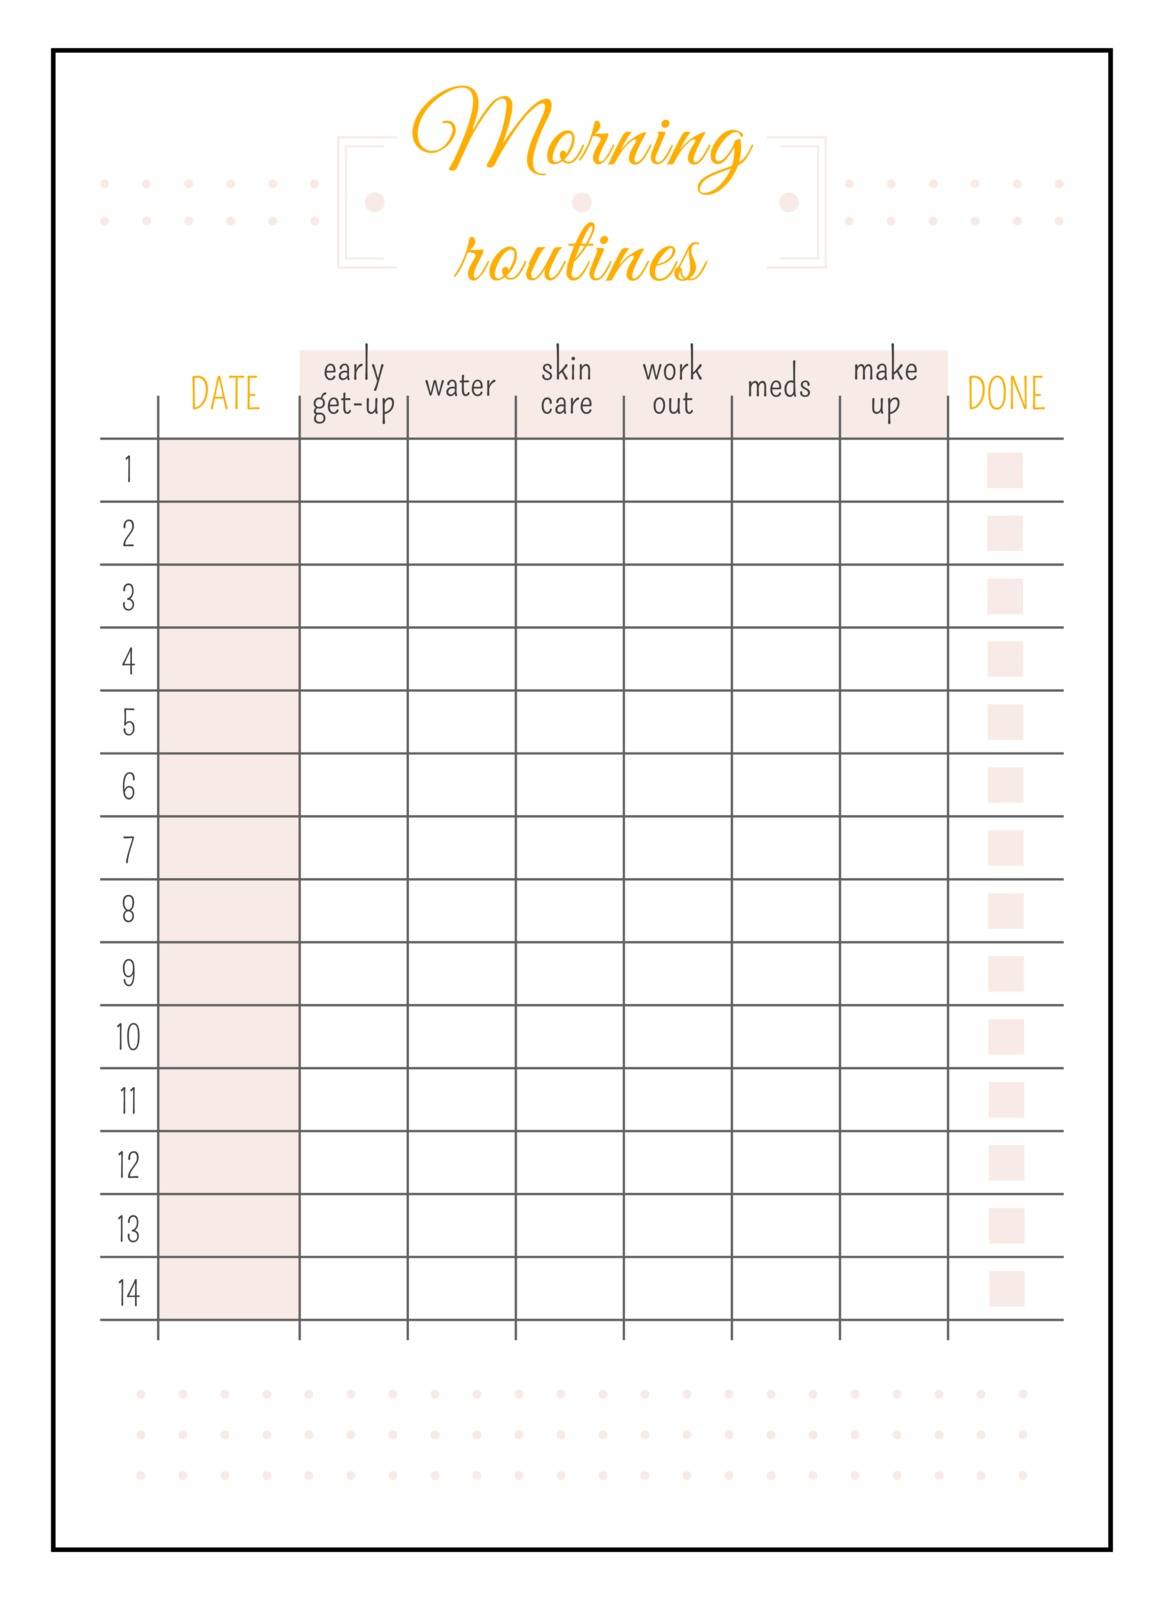 Daily routine calendar minimalist planner page design by ntl